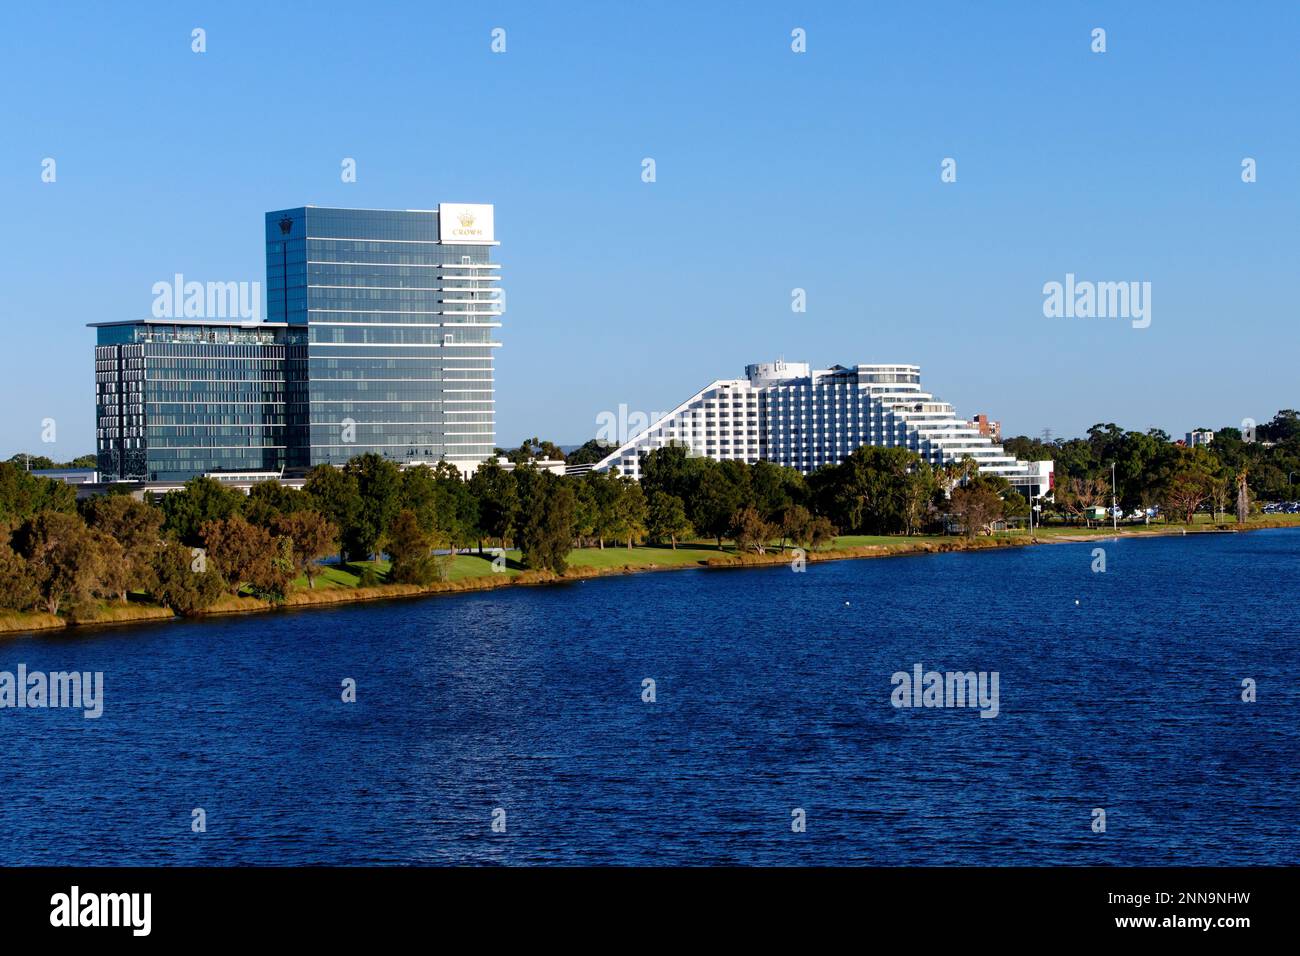 Crown resort casino complex on the swan river, Burswood, Perth, Western Australia Stock Photo